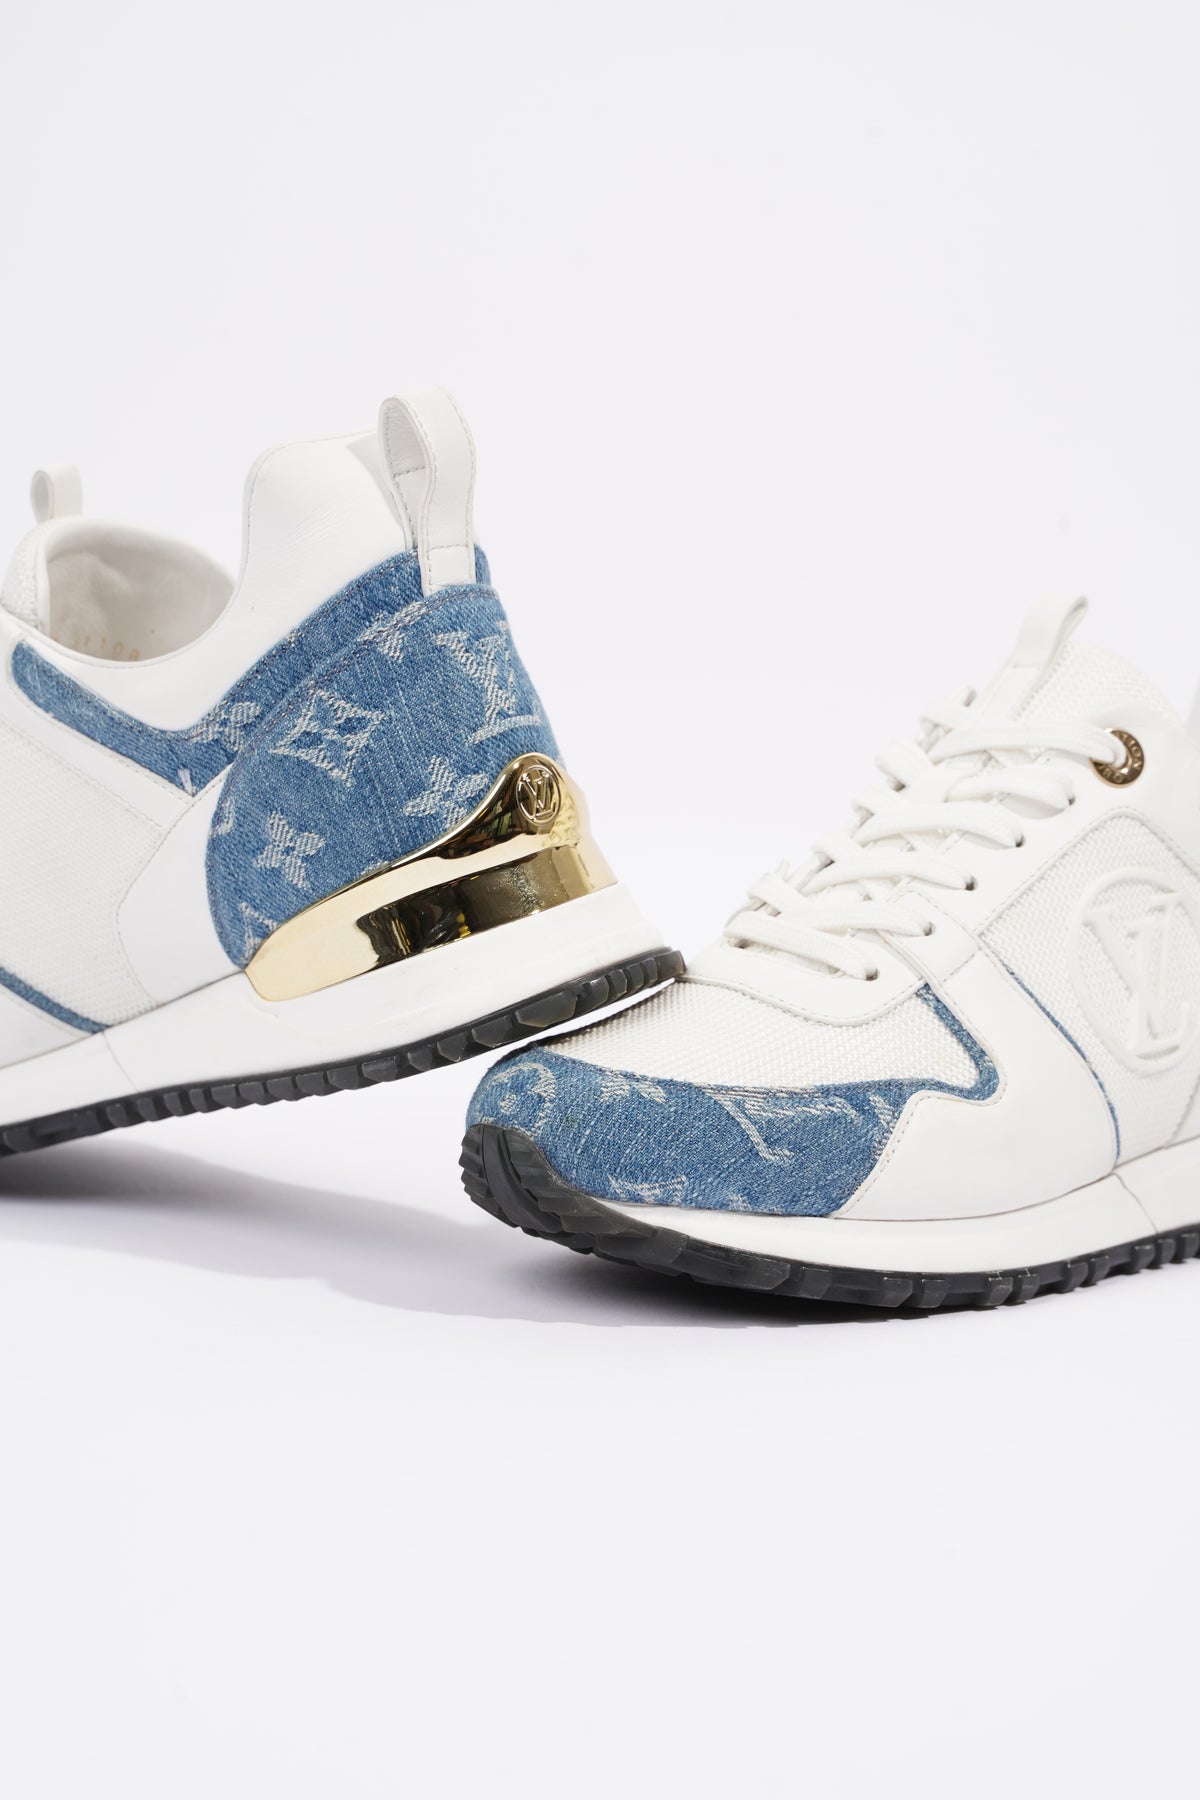 Louis Vuitton, Shoes, Louis Vuitton Womens Run Away Sneakers Denim And  Monogram Denim Blue